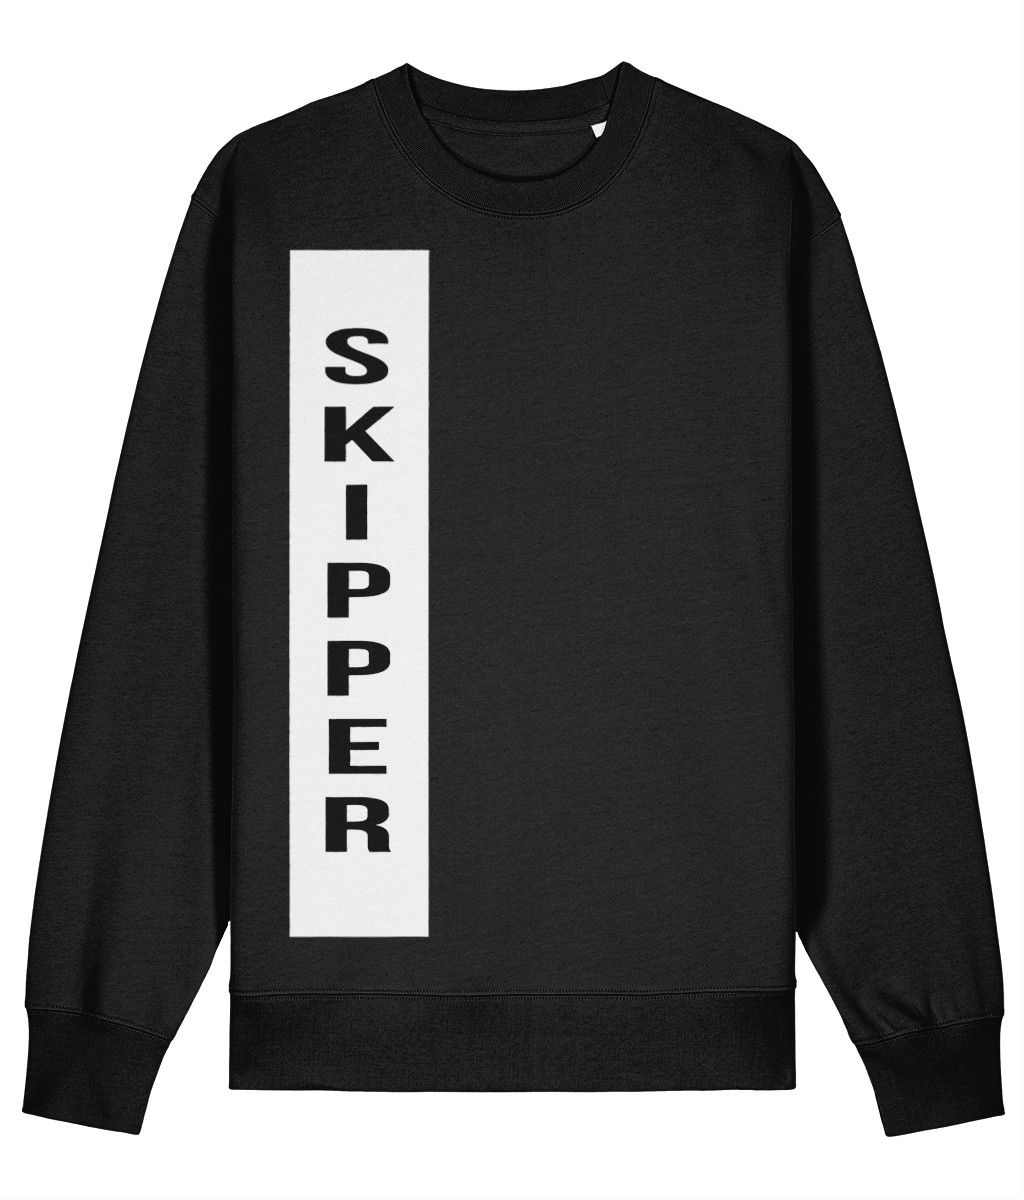 Skipper Changer Sweatshirt Black